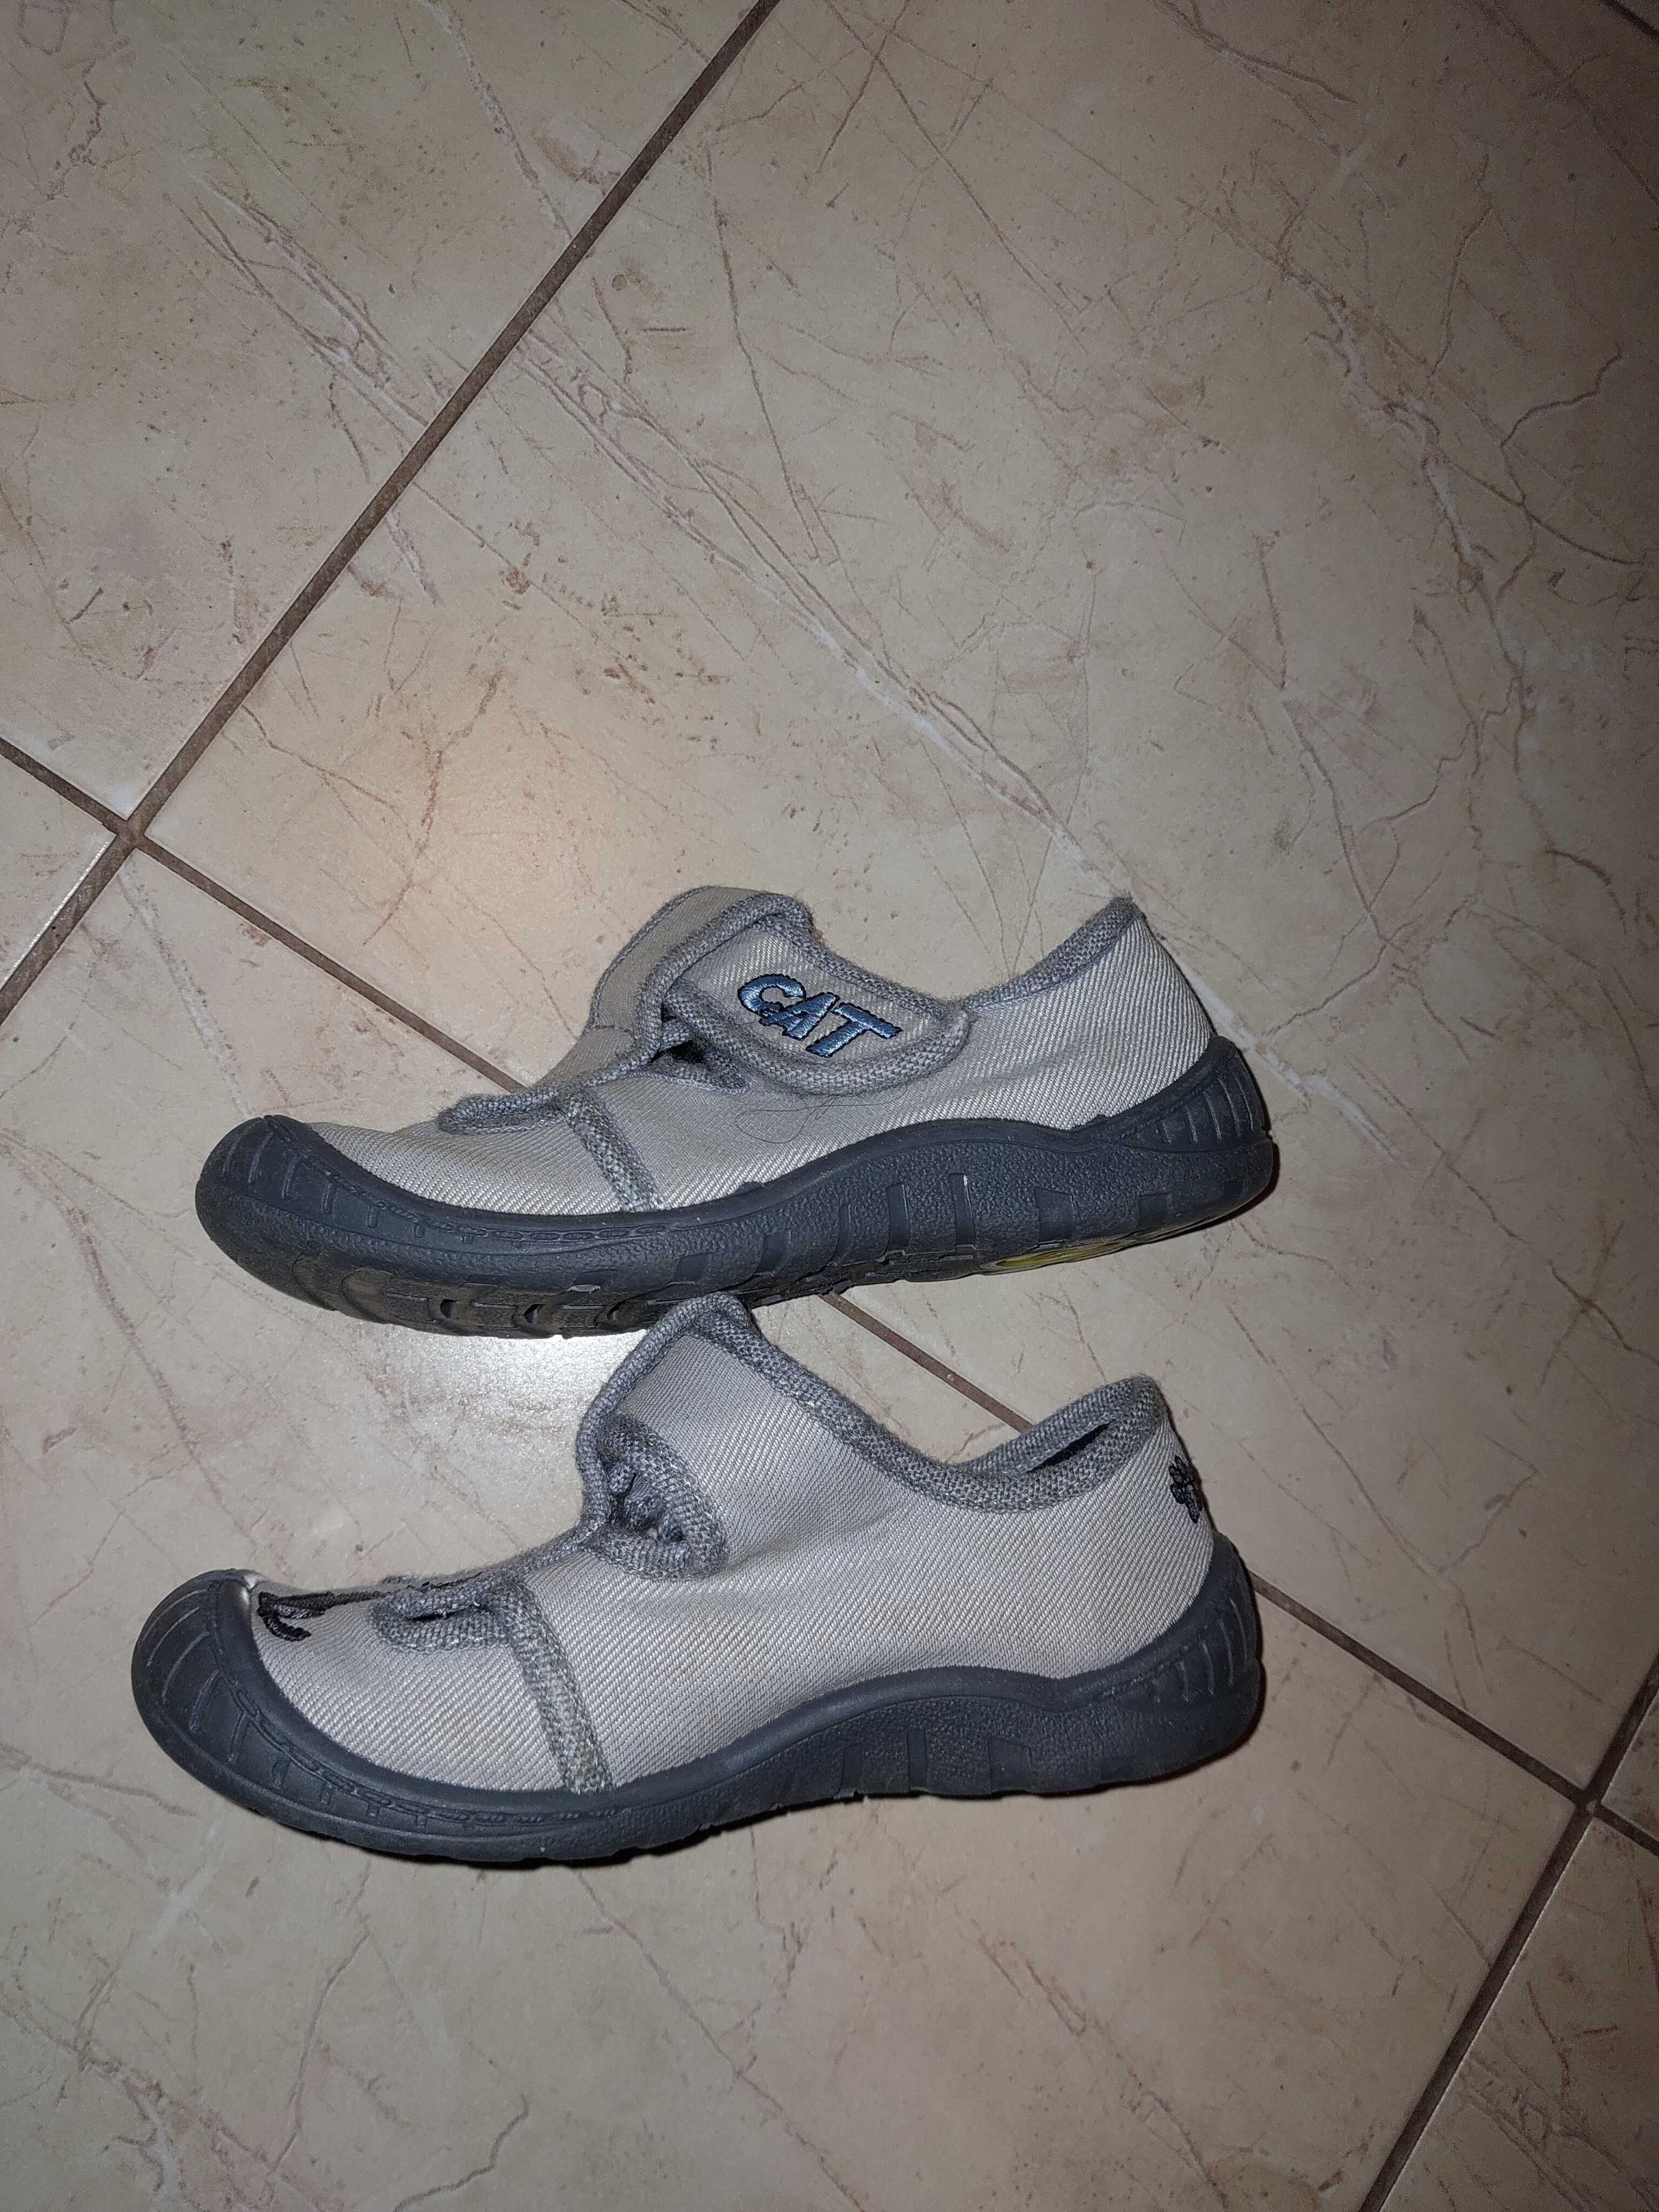 Pantofle do przedszkola 27 buciki papucie kapcie M&D